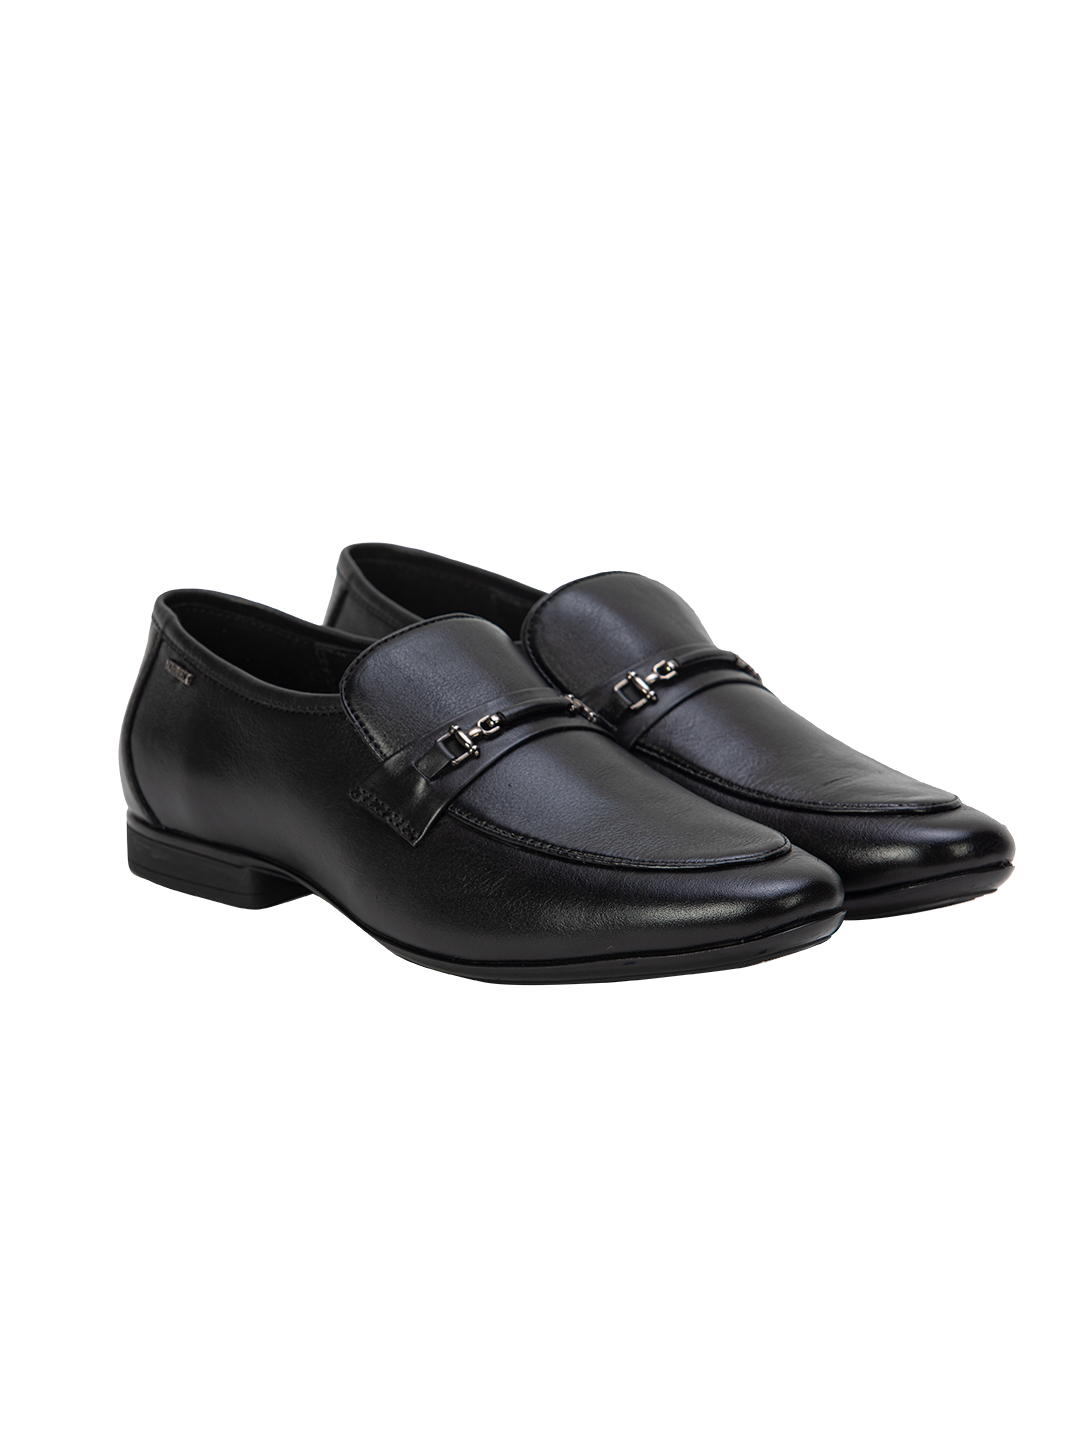 Mens Formal Footwear in Sri lanka, Buy Men Formal Shoes Online at Best ...